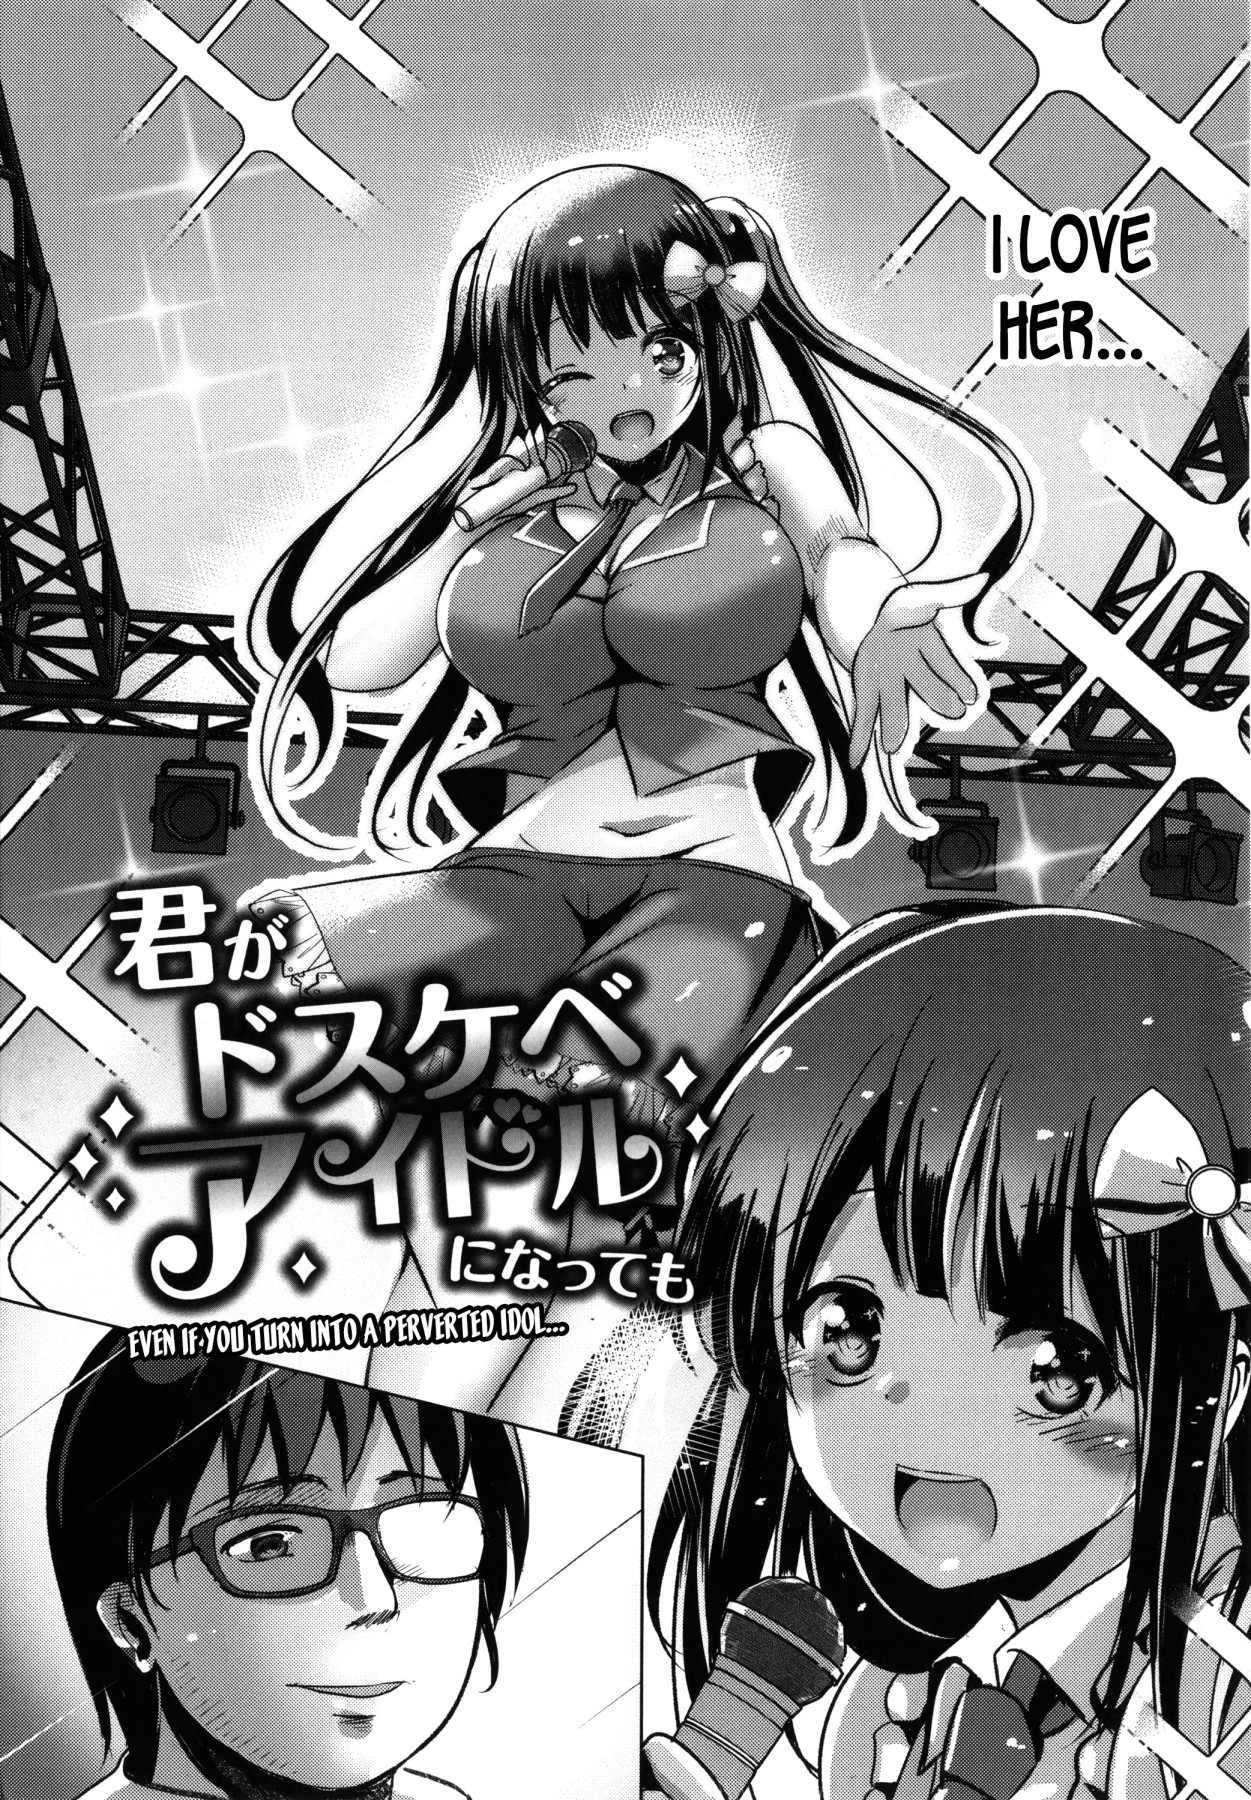 Hentai Manga Comic-Even if You Turn Into a Perverted Idol...-Read-3